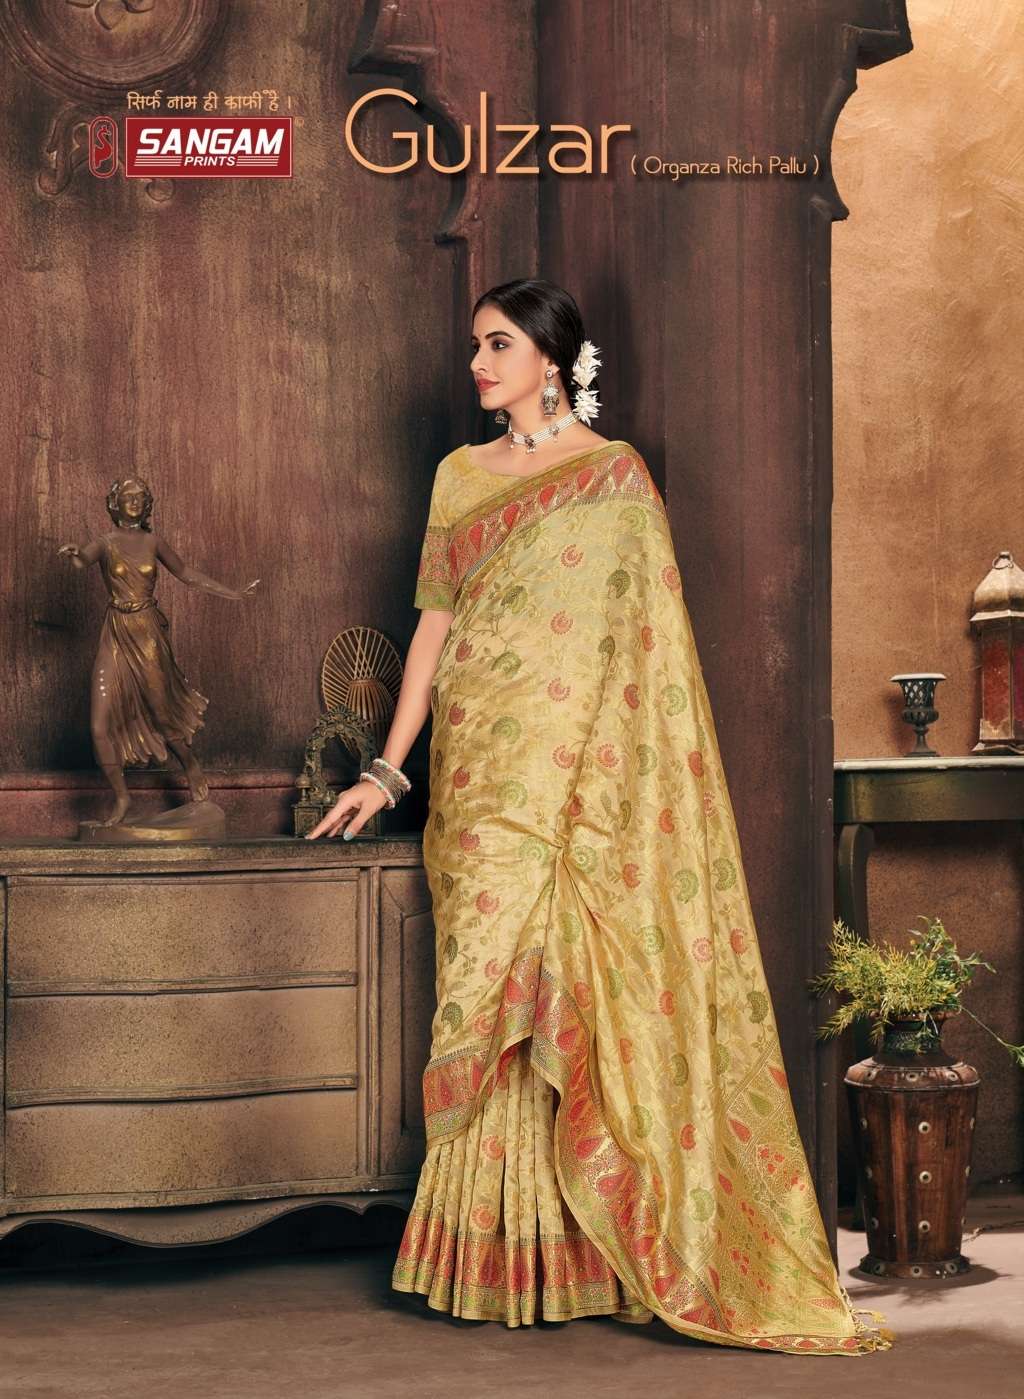 sangam prints gulzar organza rich pallu saris wholesaler